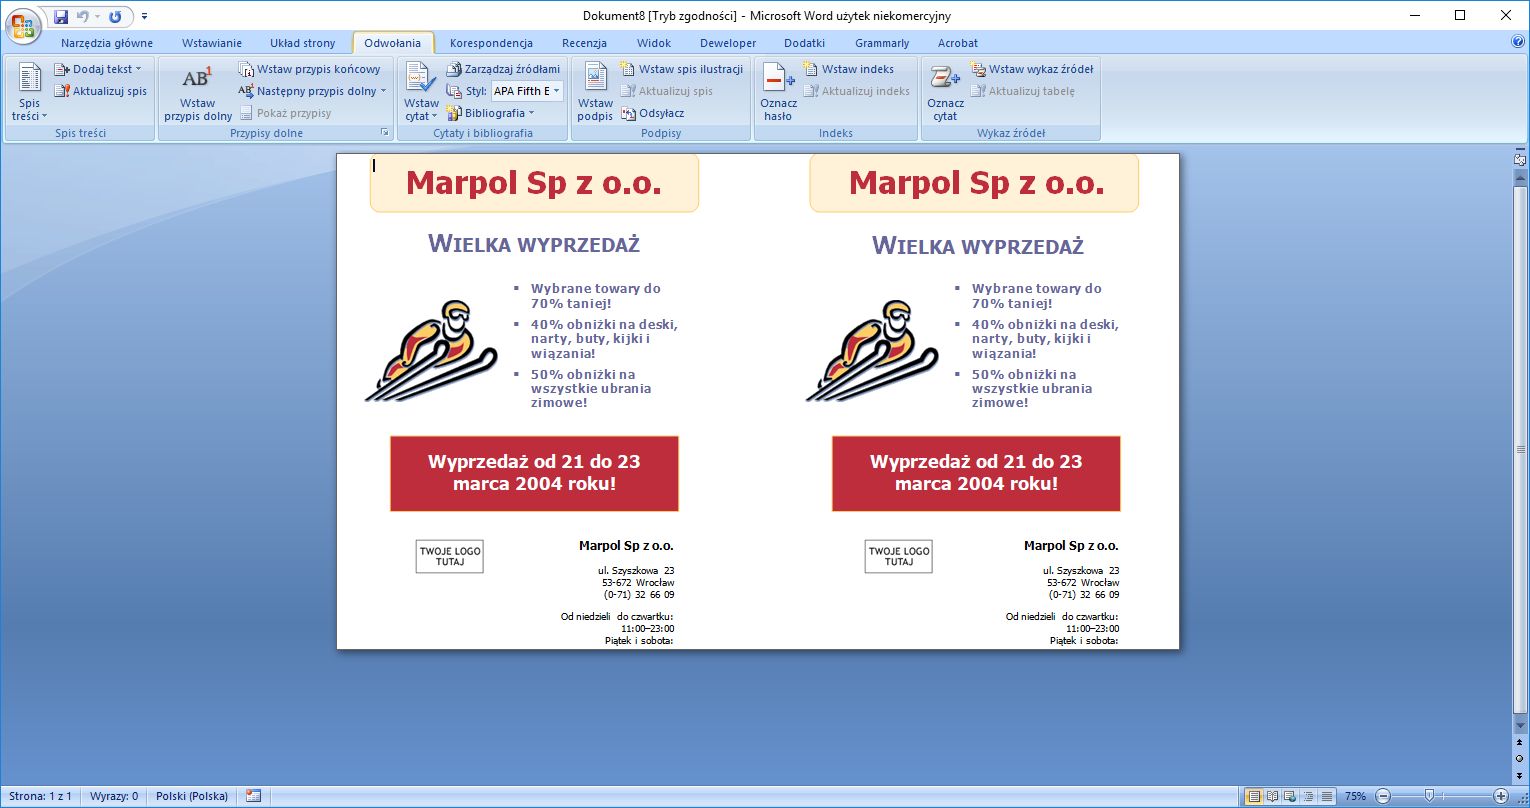 ms office 2007 standard download